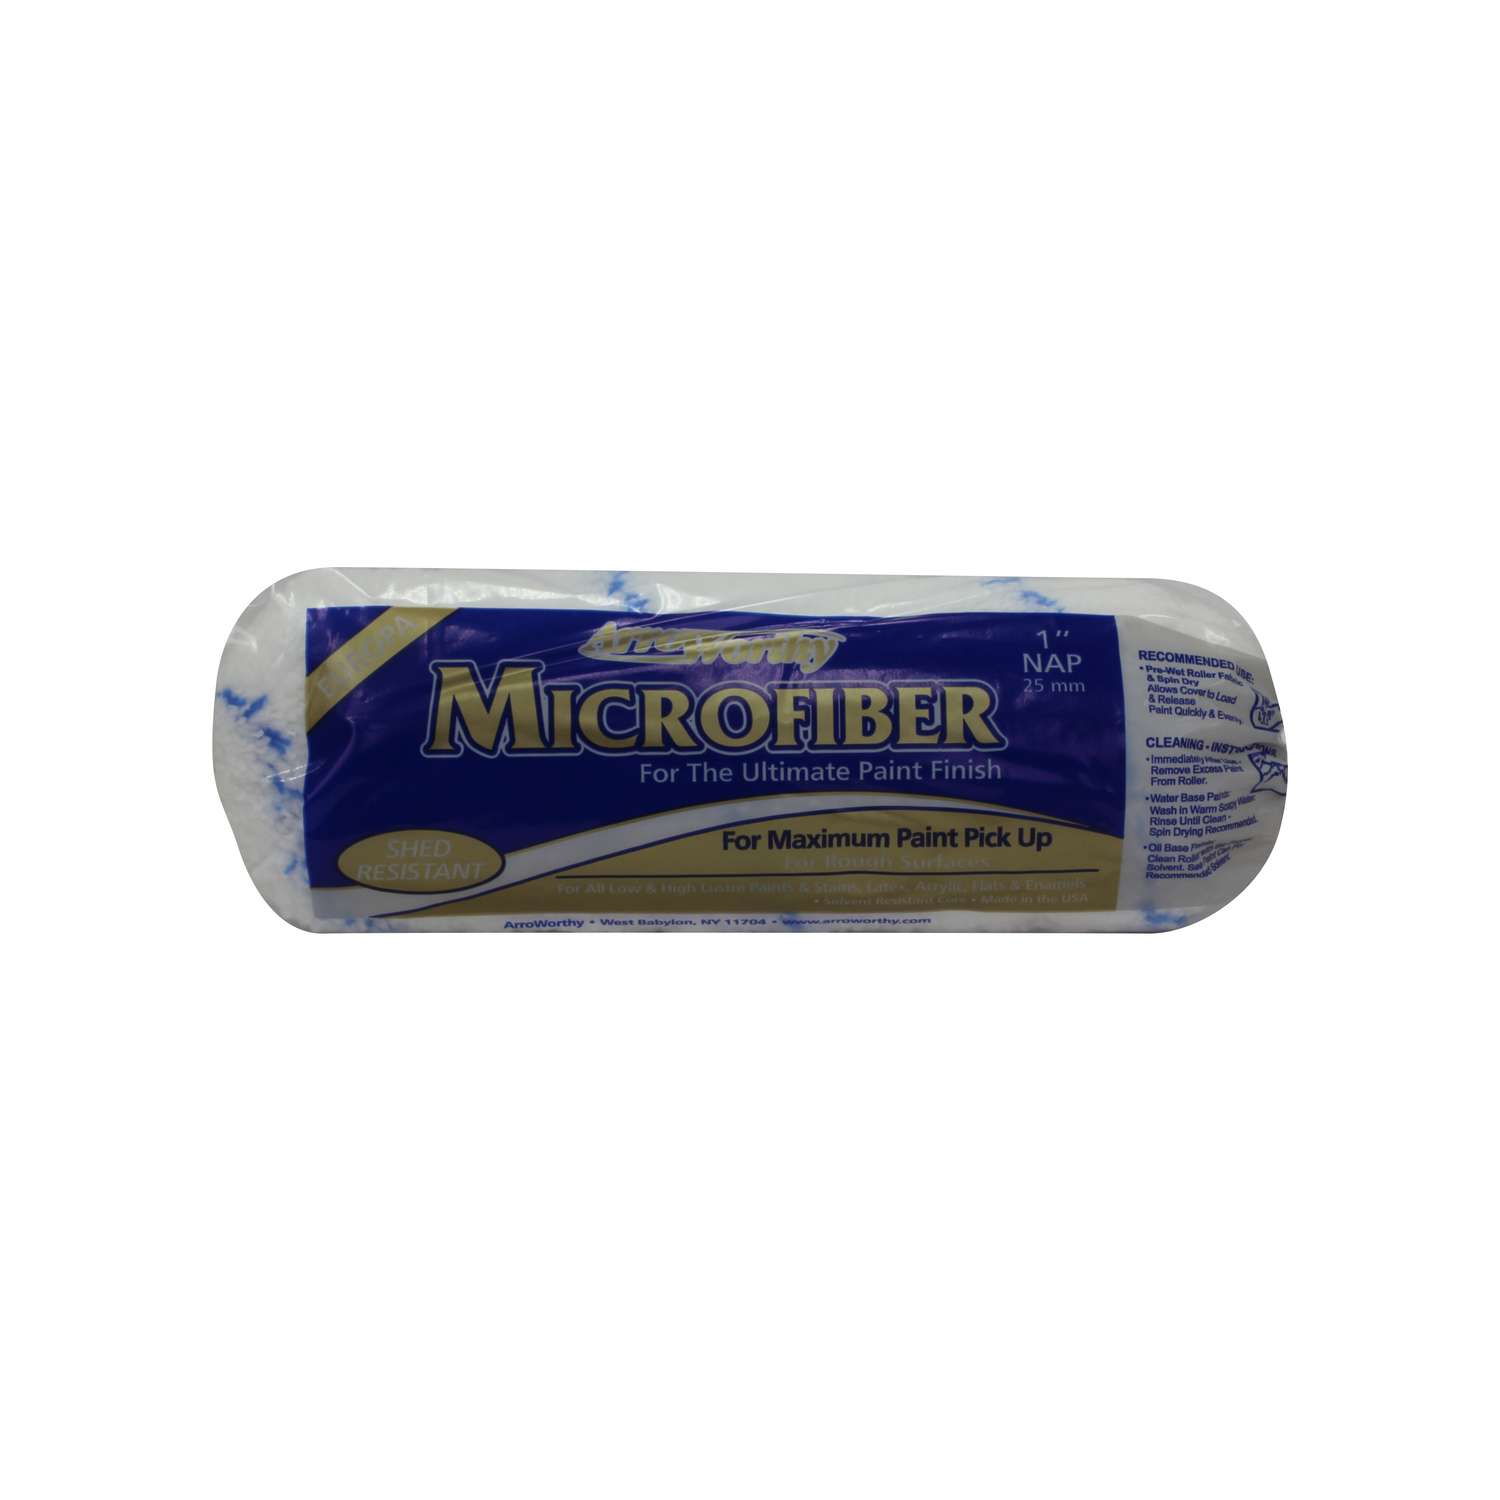 ArroWorthy Microfiber Roller Cover 9" X 9/16" Nap 25 pack 